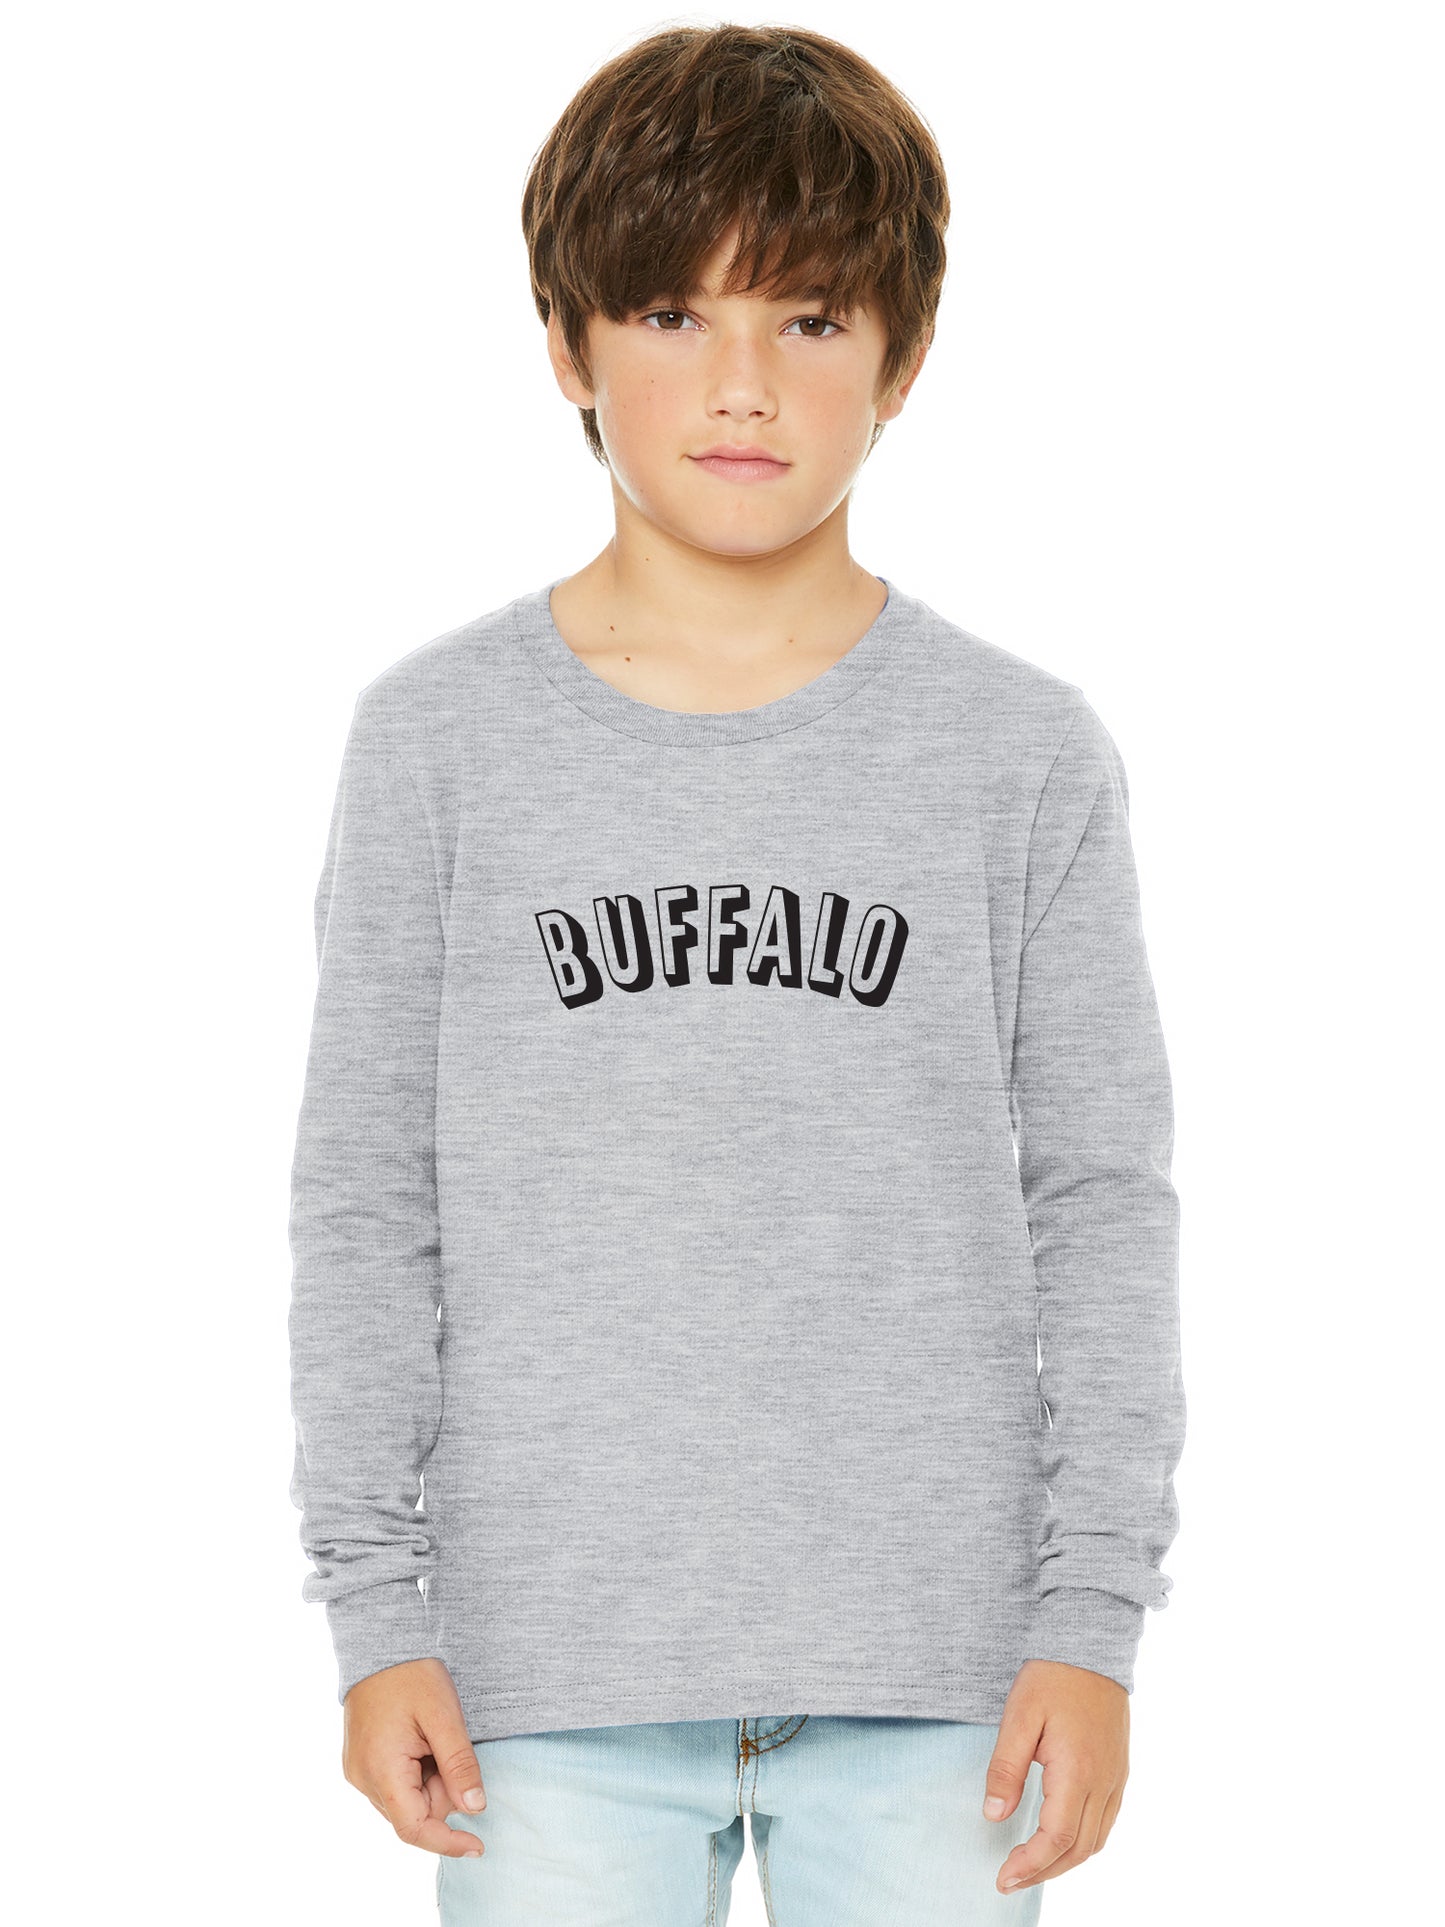 Daxton Youth Long Sleeve Buffalo Basic Tshirt